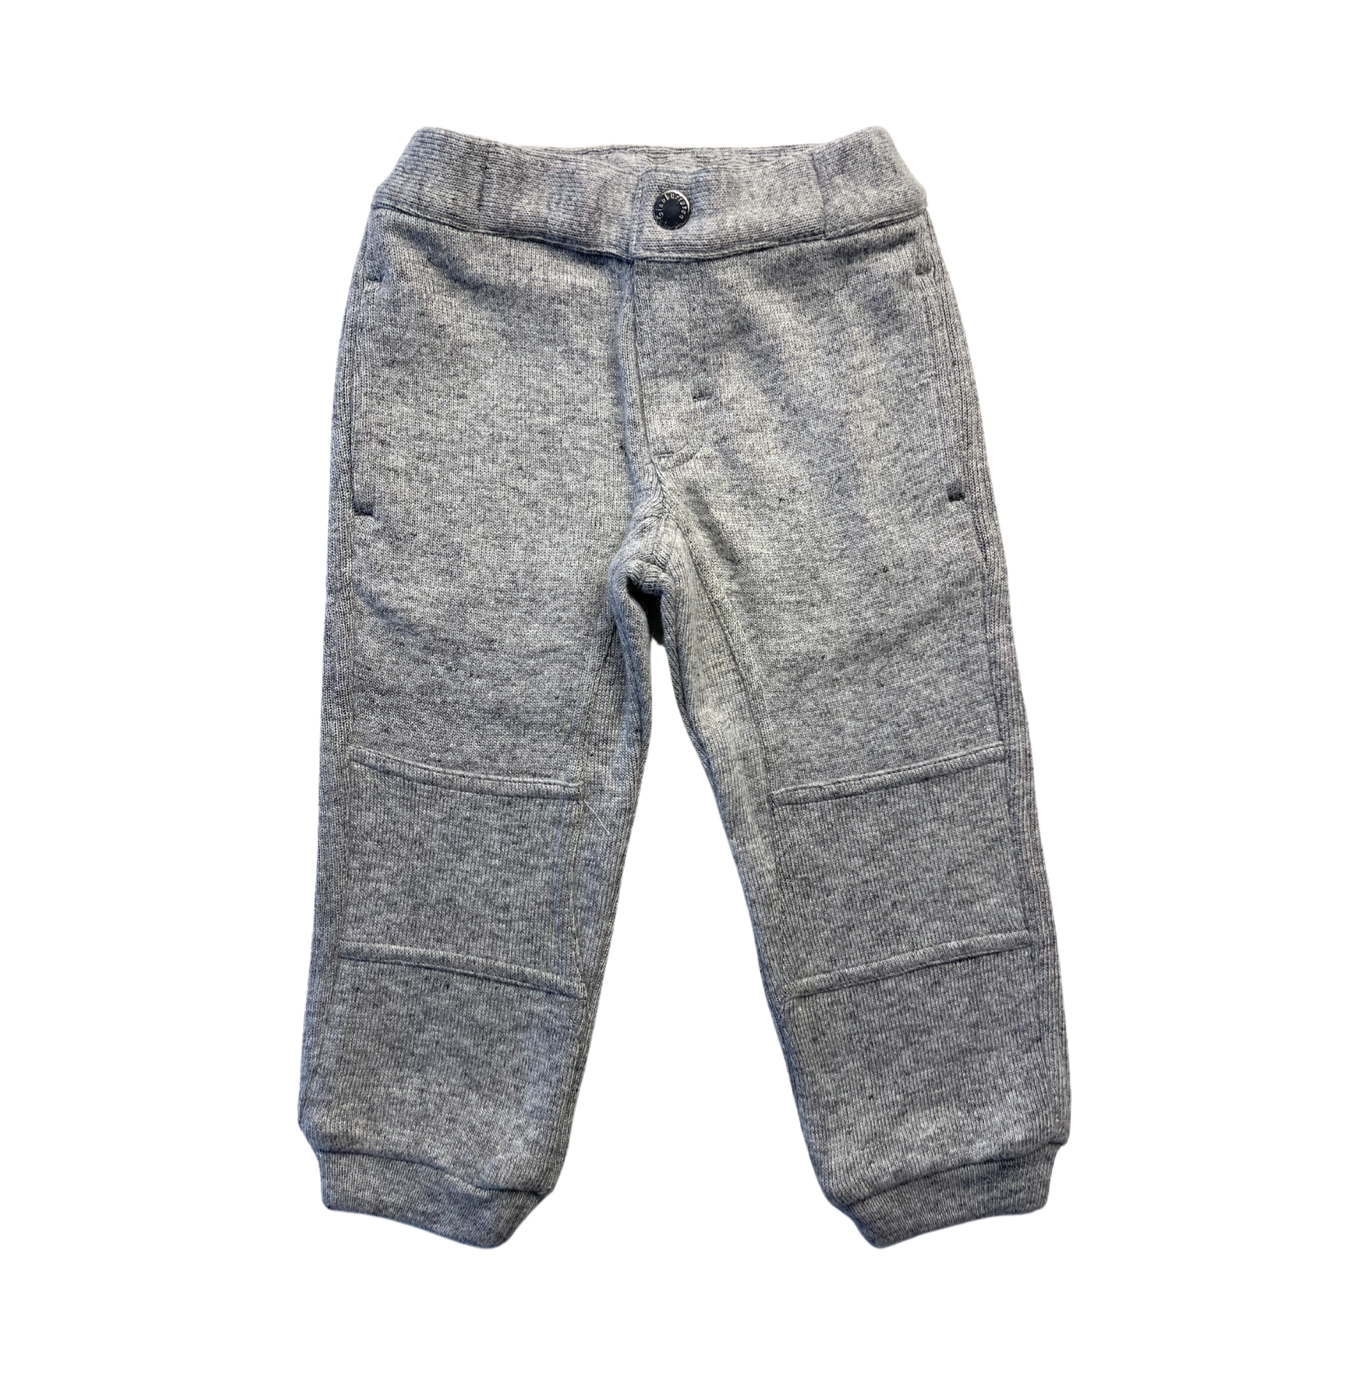 I GIANBURRASCA - Pantalon confort gris clair (neuf) - 2 ans